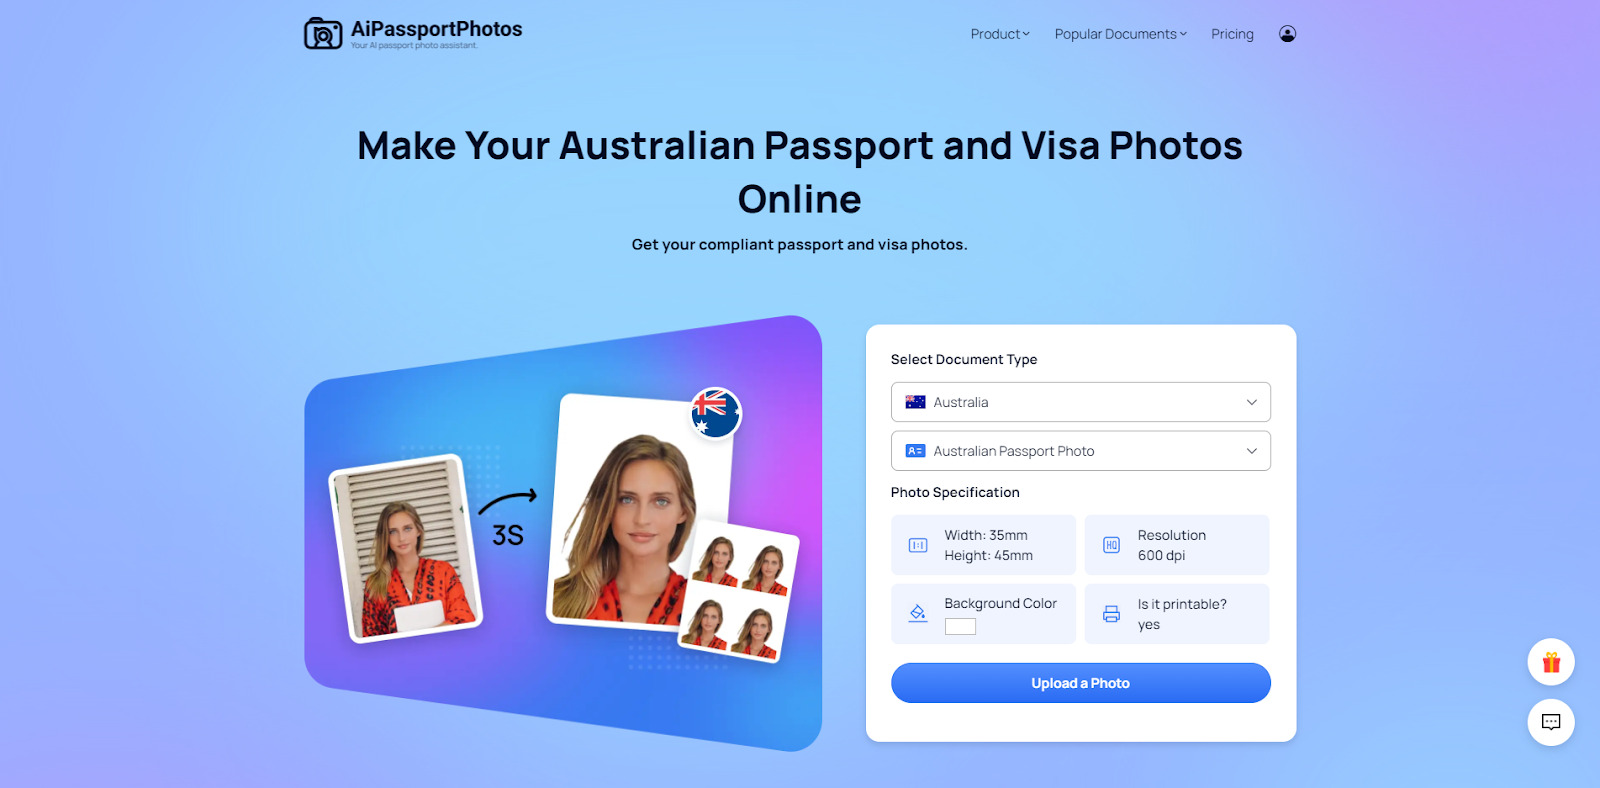 How to Get Australia Passport Photos Online?